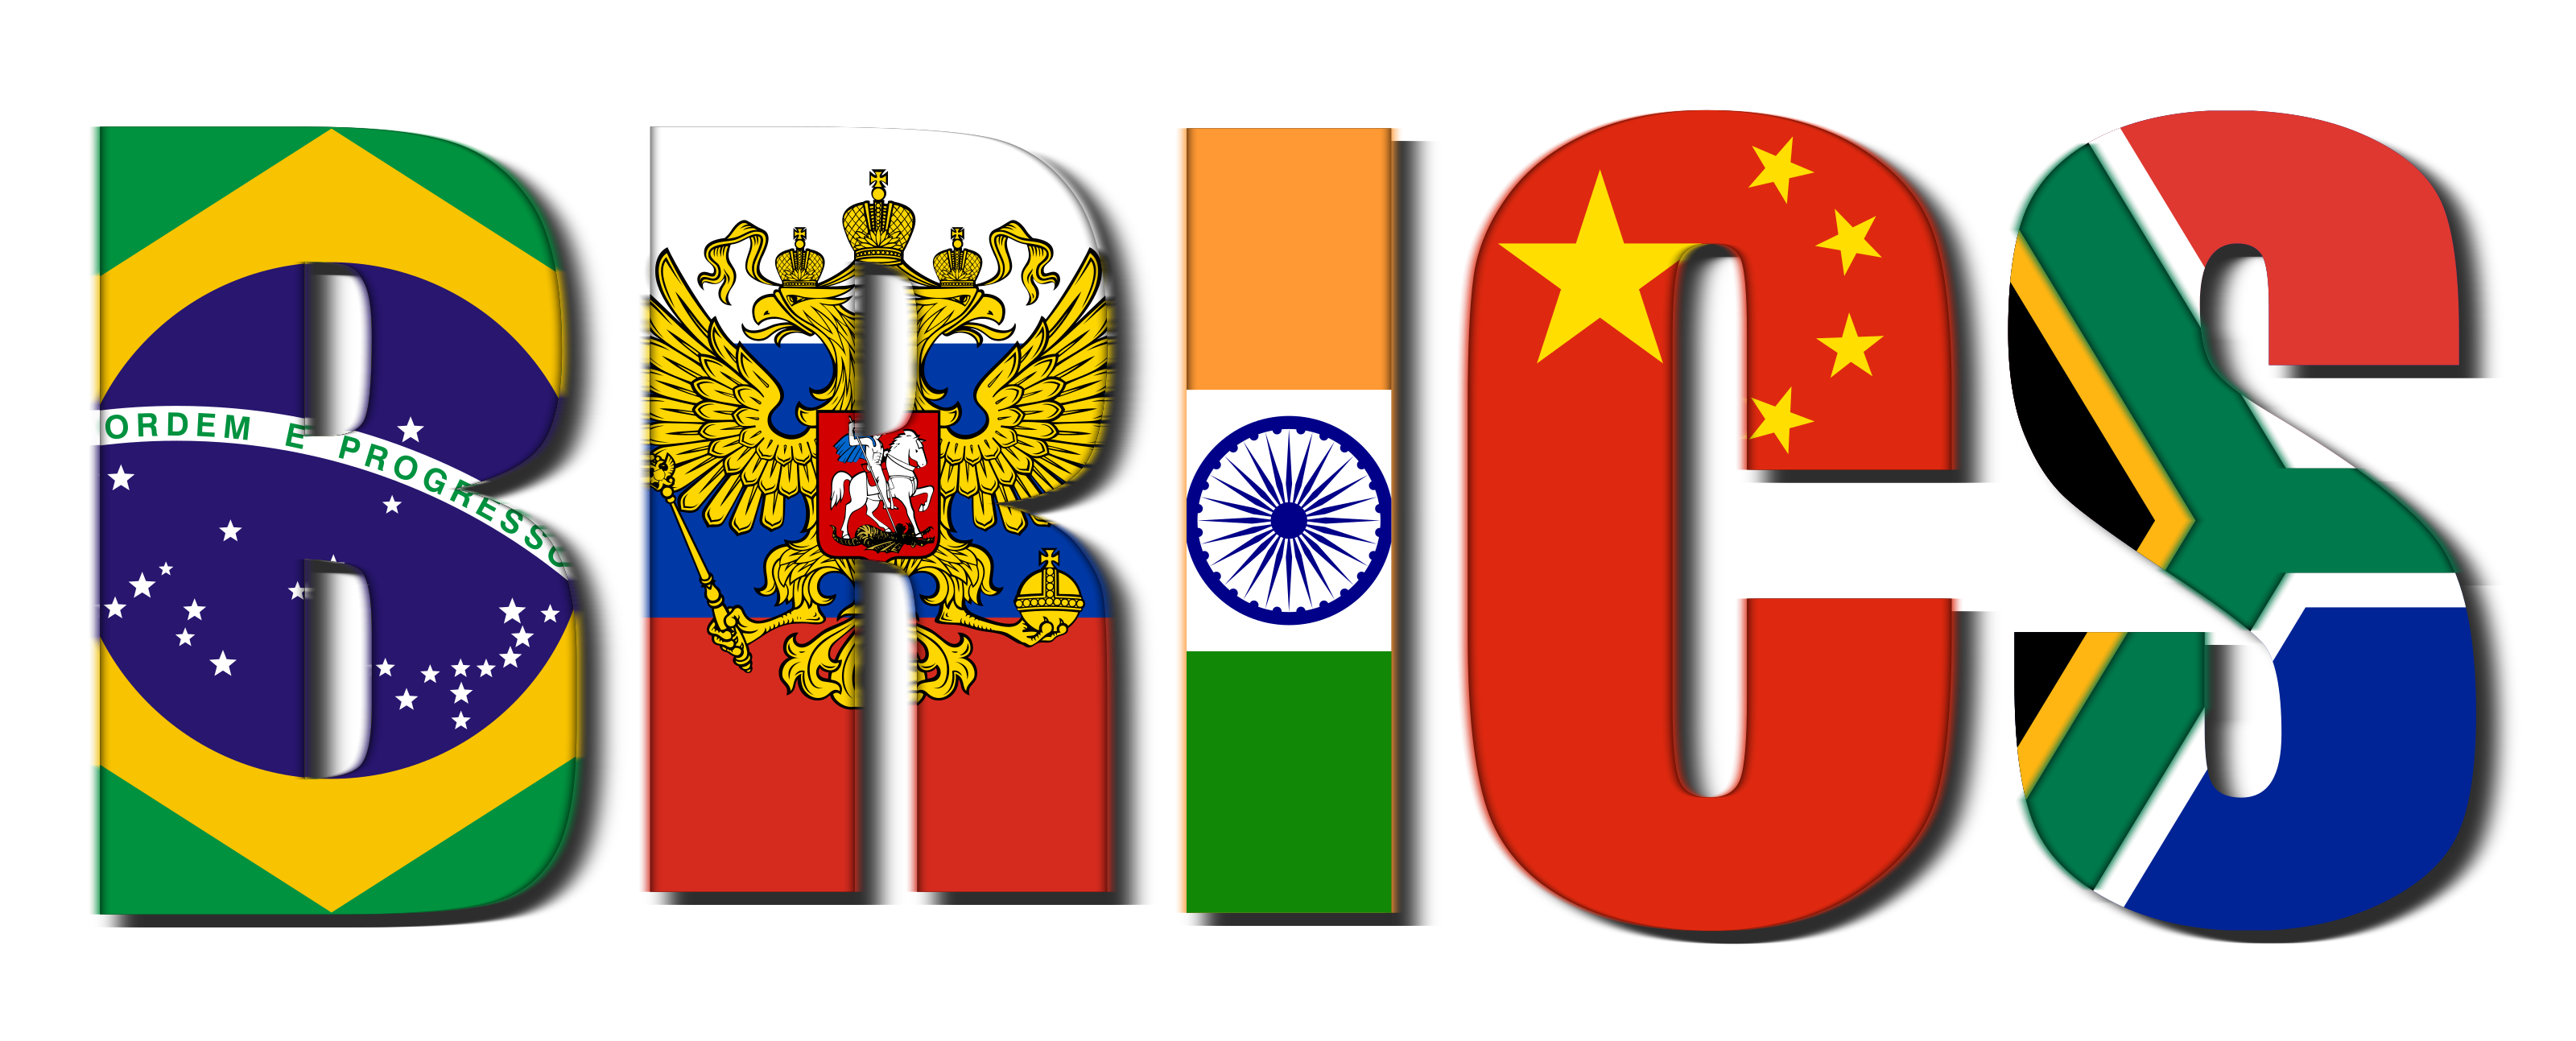 kisspng-9th-brics-summit-india-8th-brics-summit-china-typogrpahic